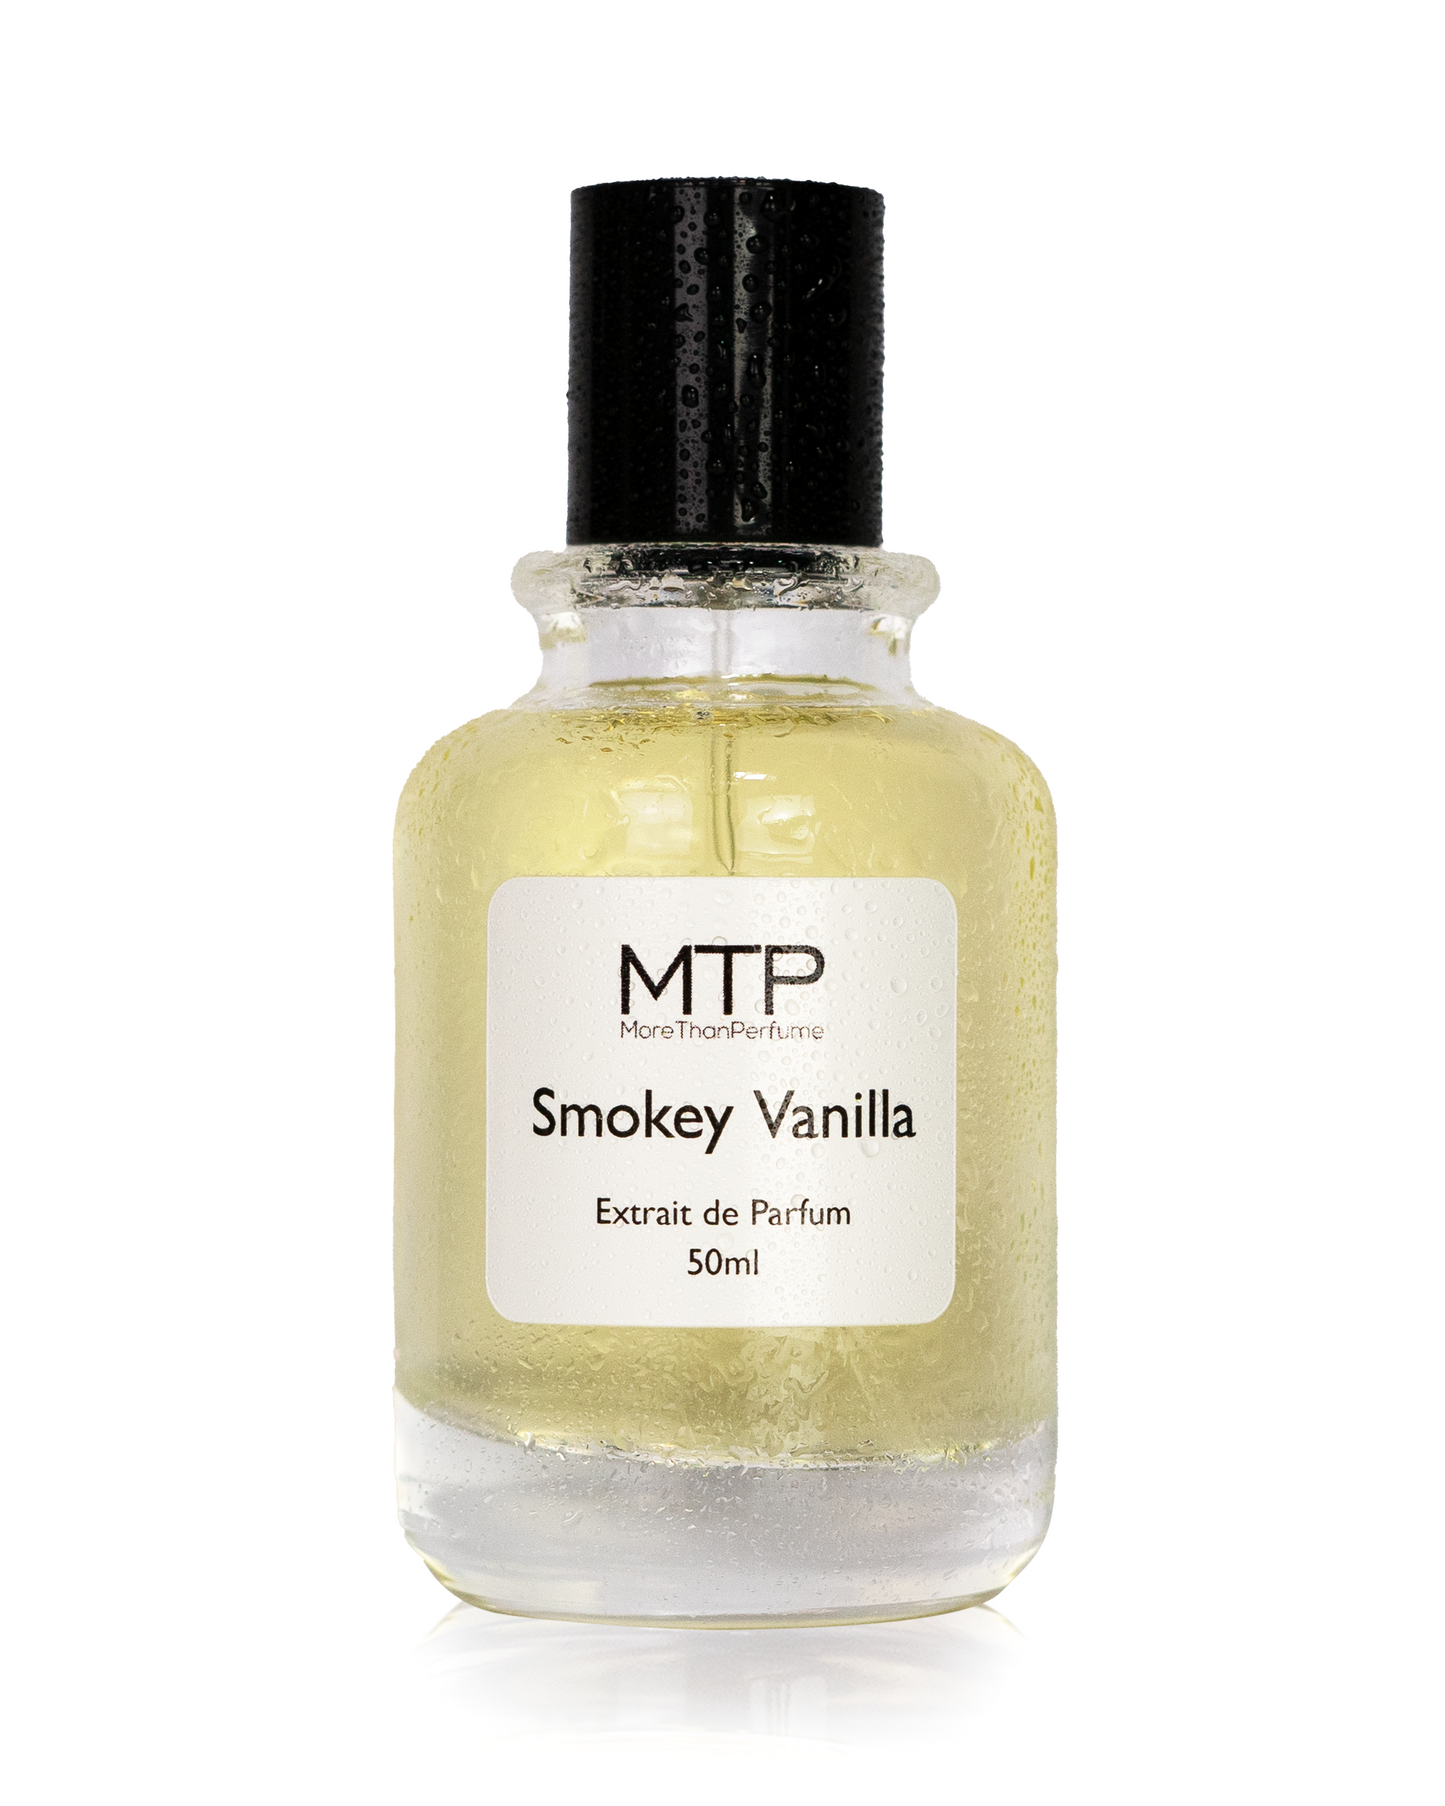 Smokey Vanilla